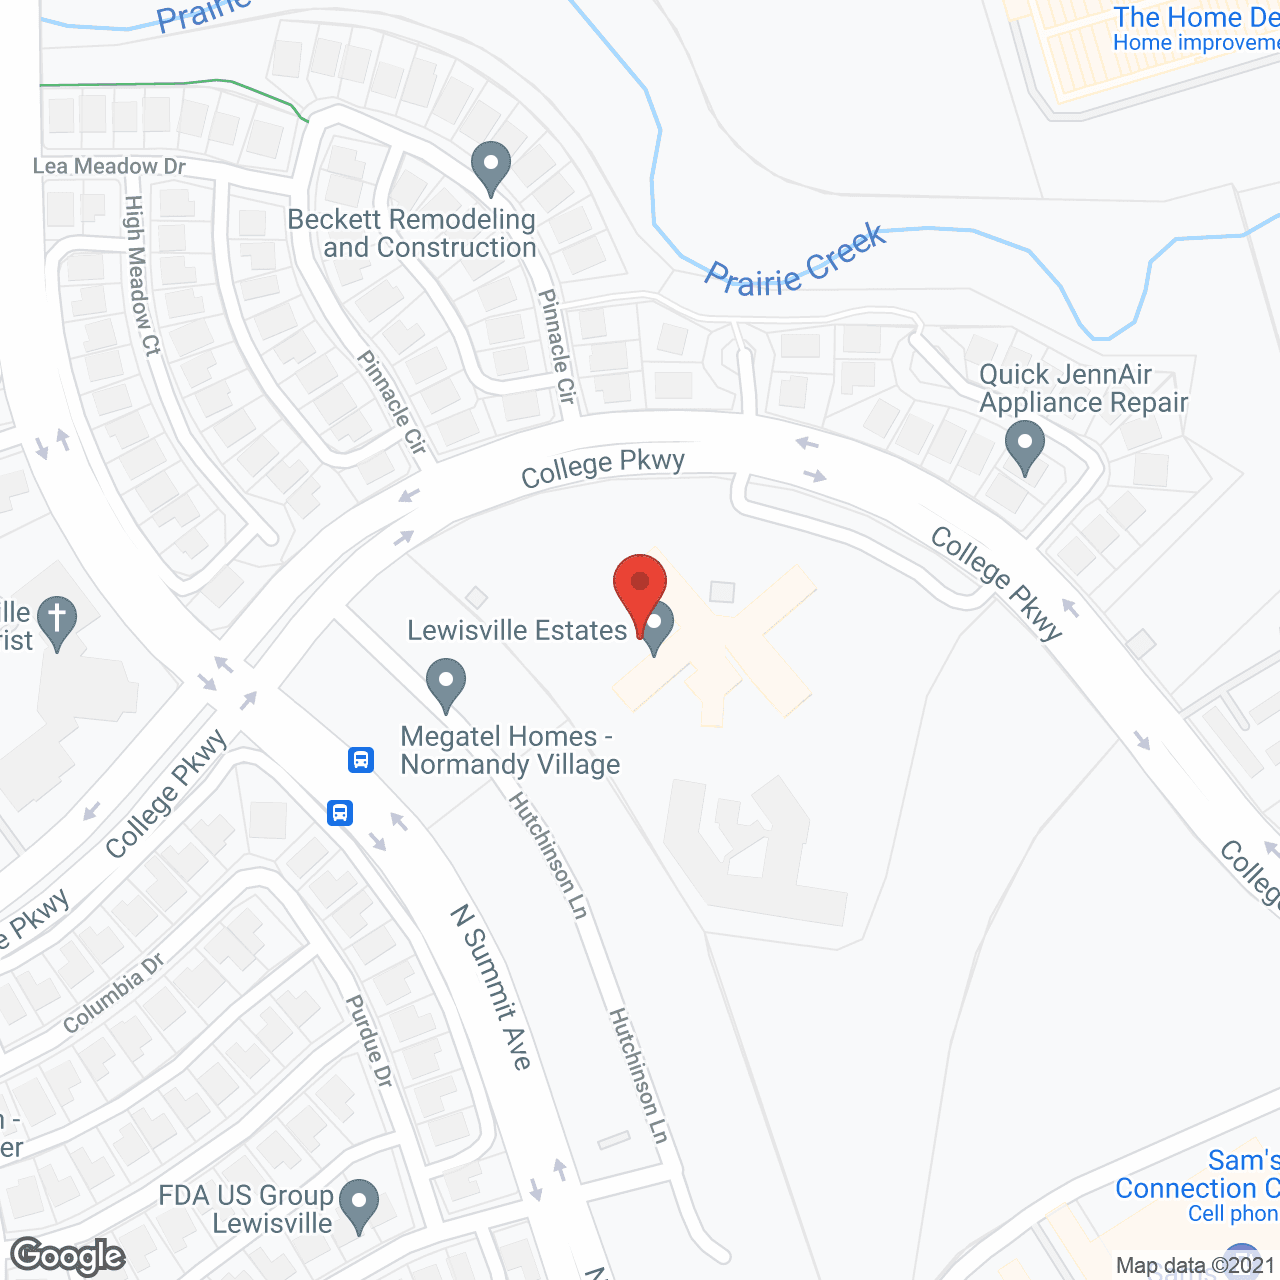 Lewisville Estates - IL in google map